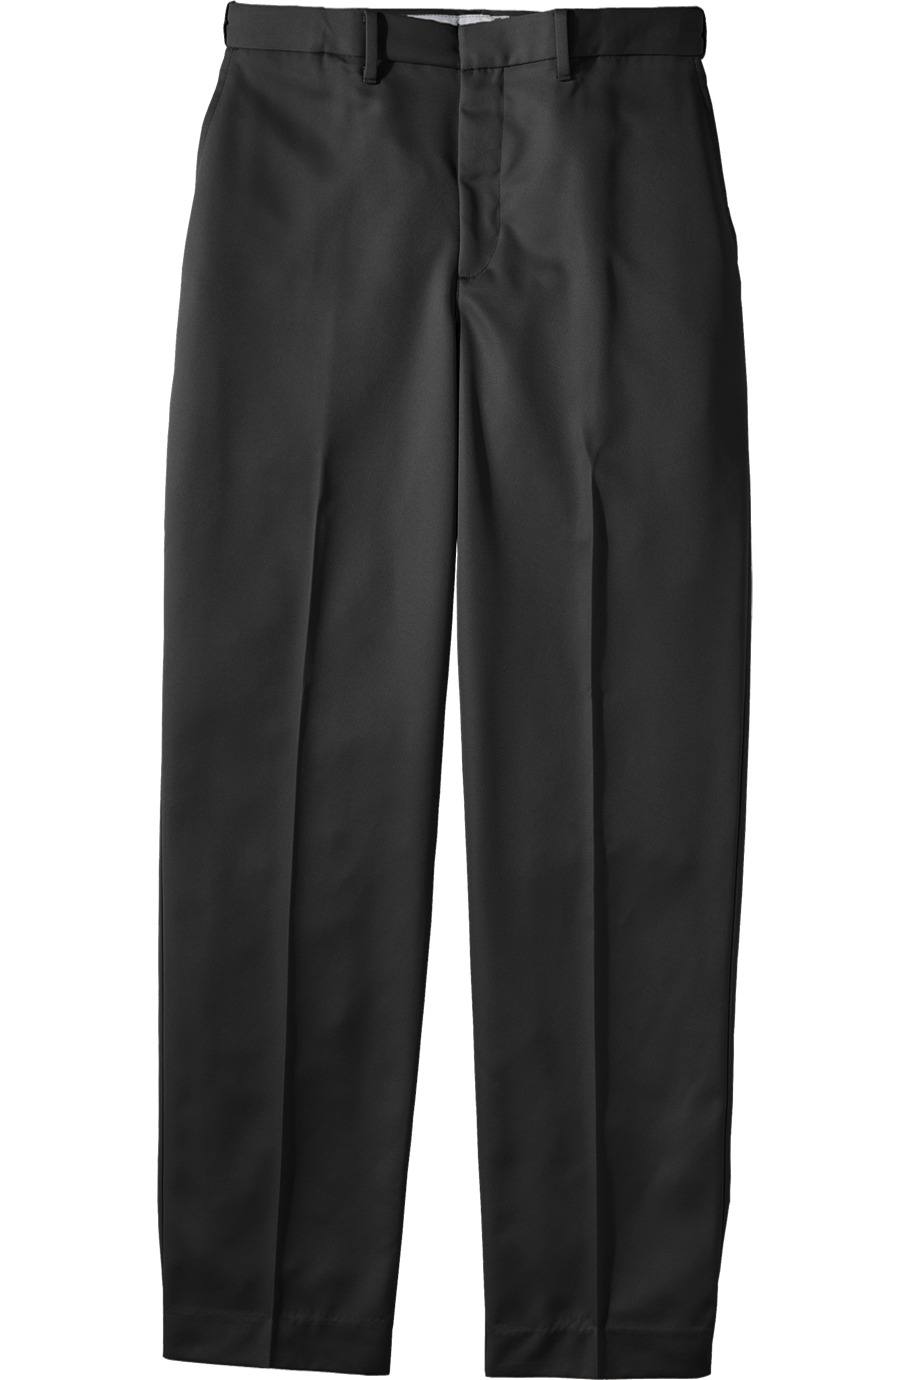 Edwards Garment 2574 - Men's Microfiber Flat Front Pant